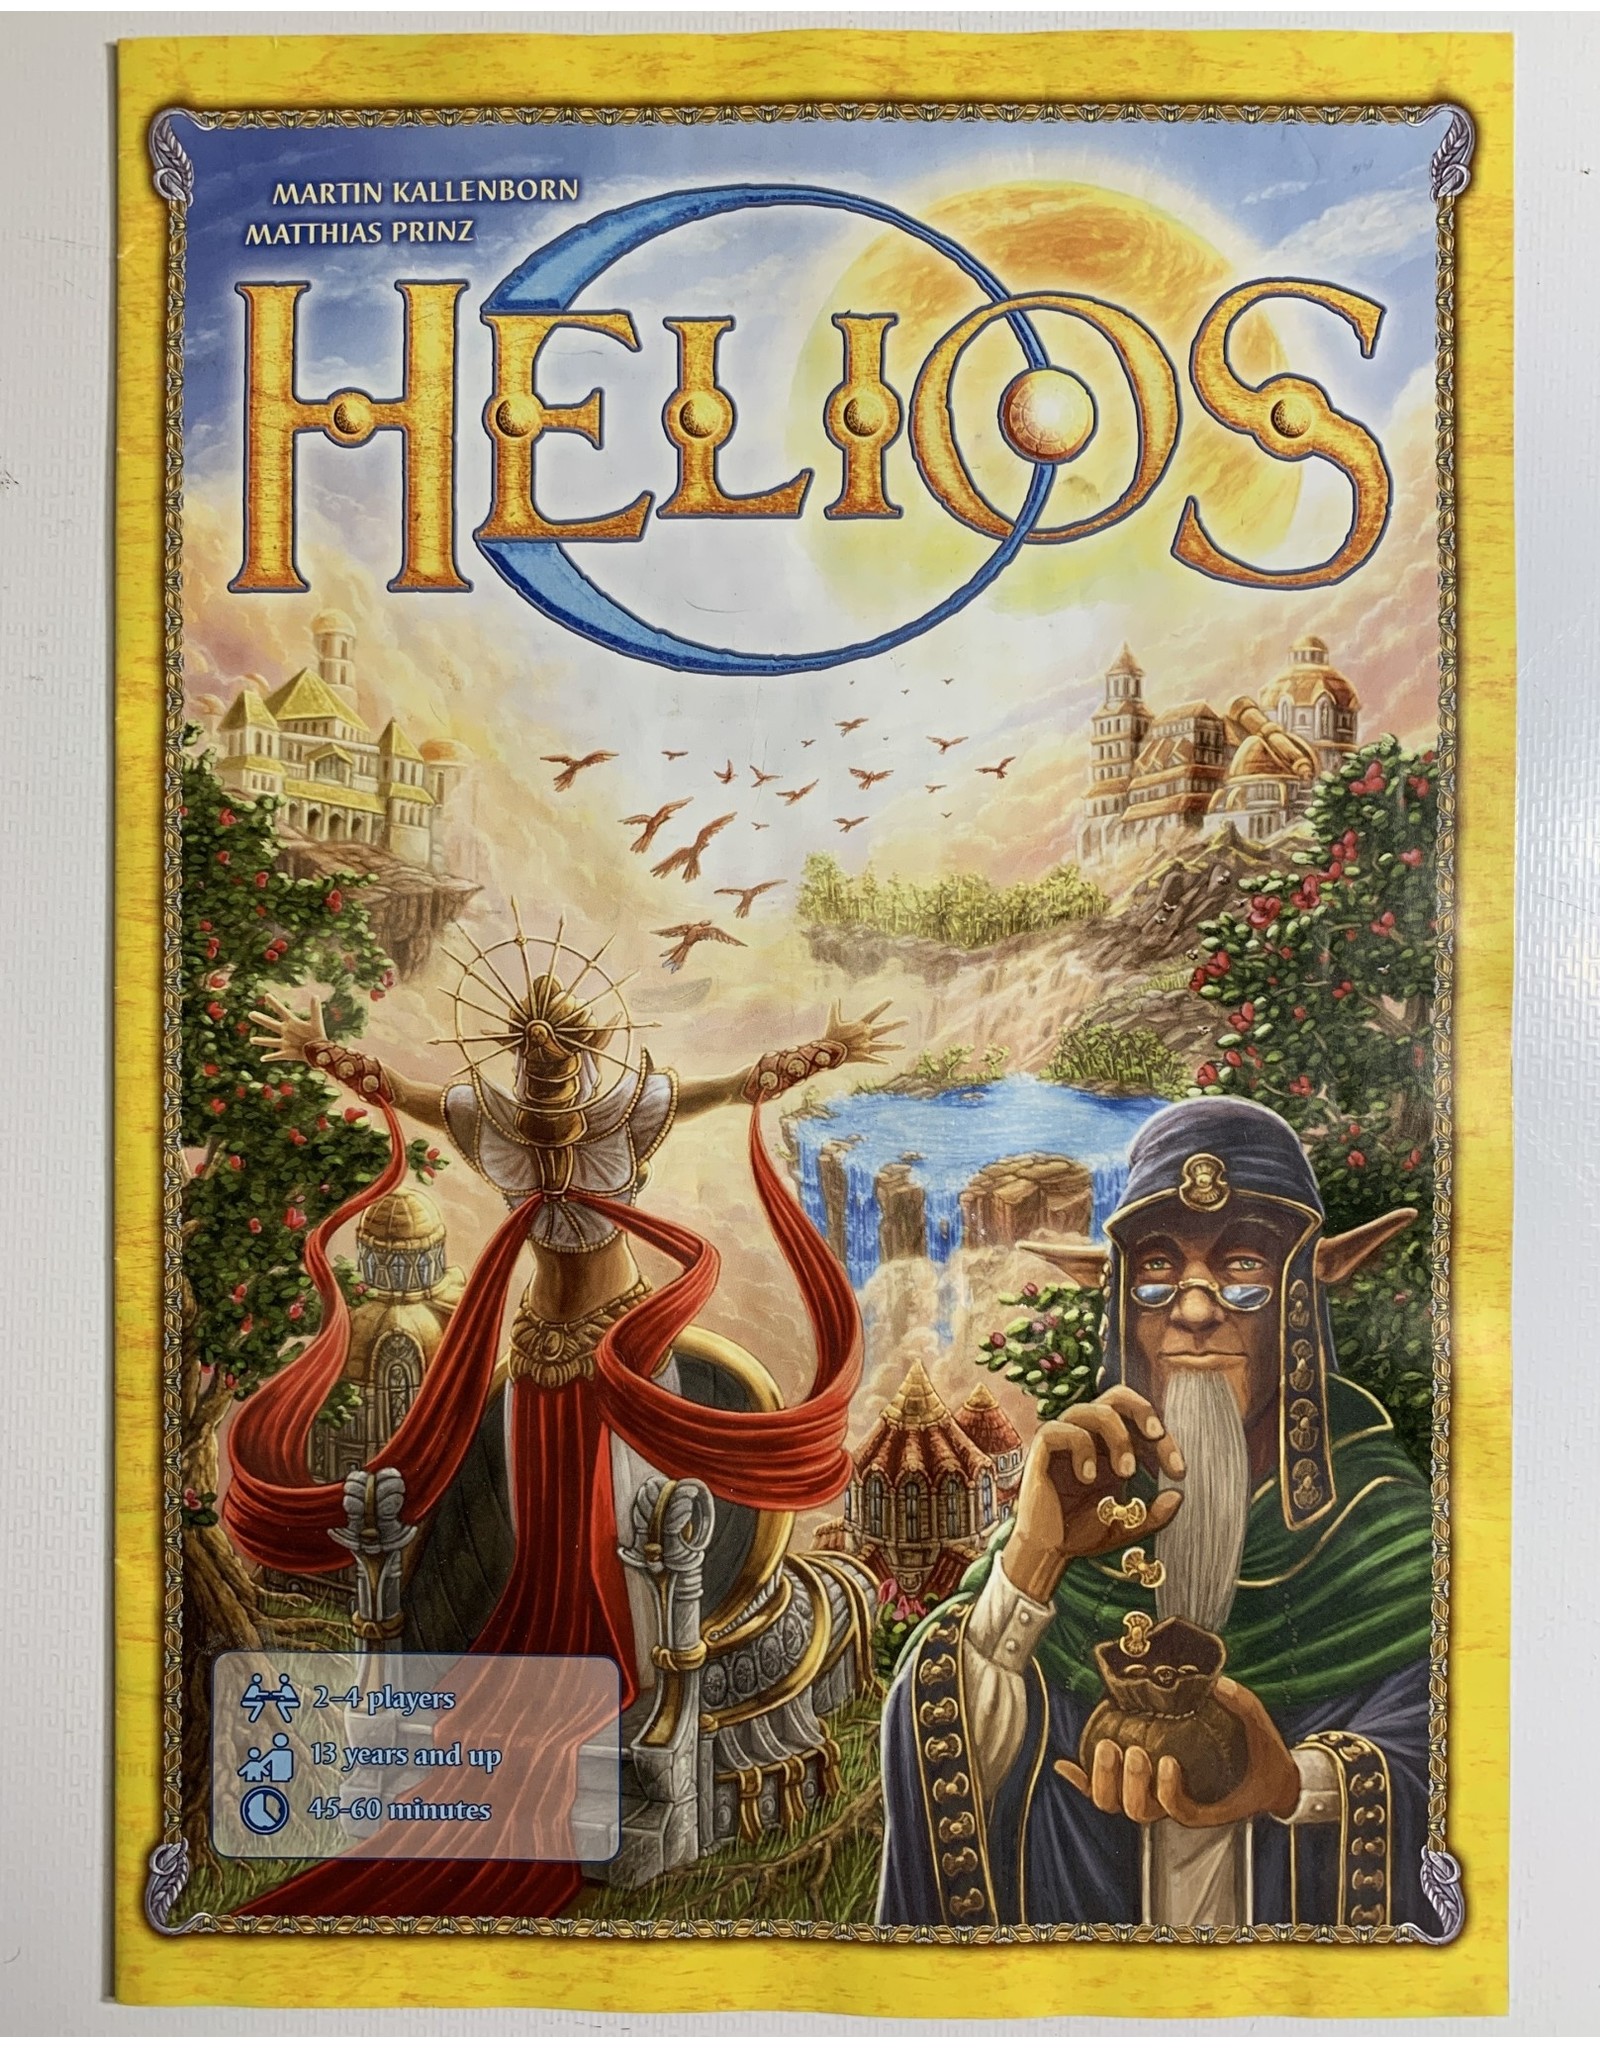 Z-Man Games Helios (2014)